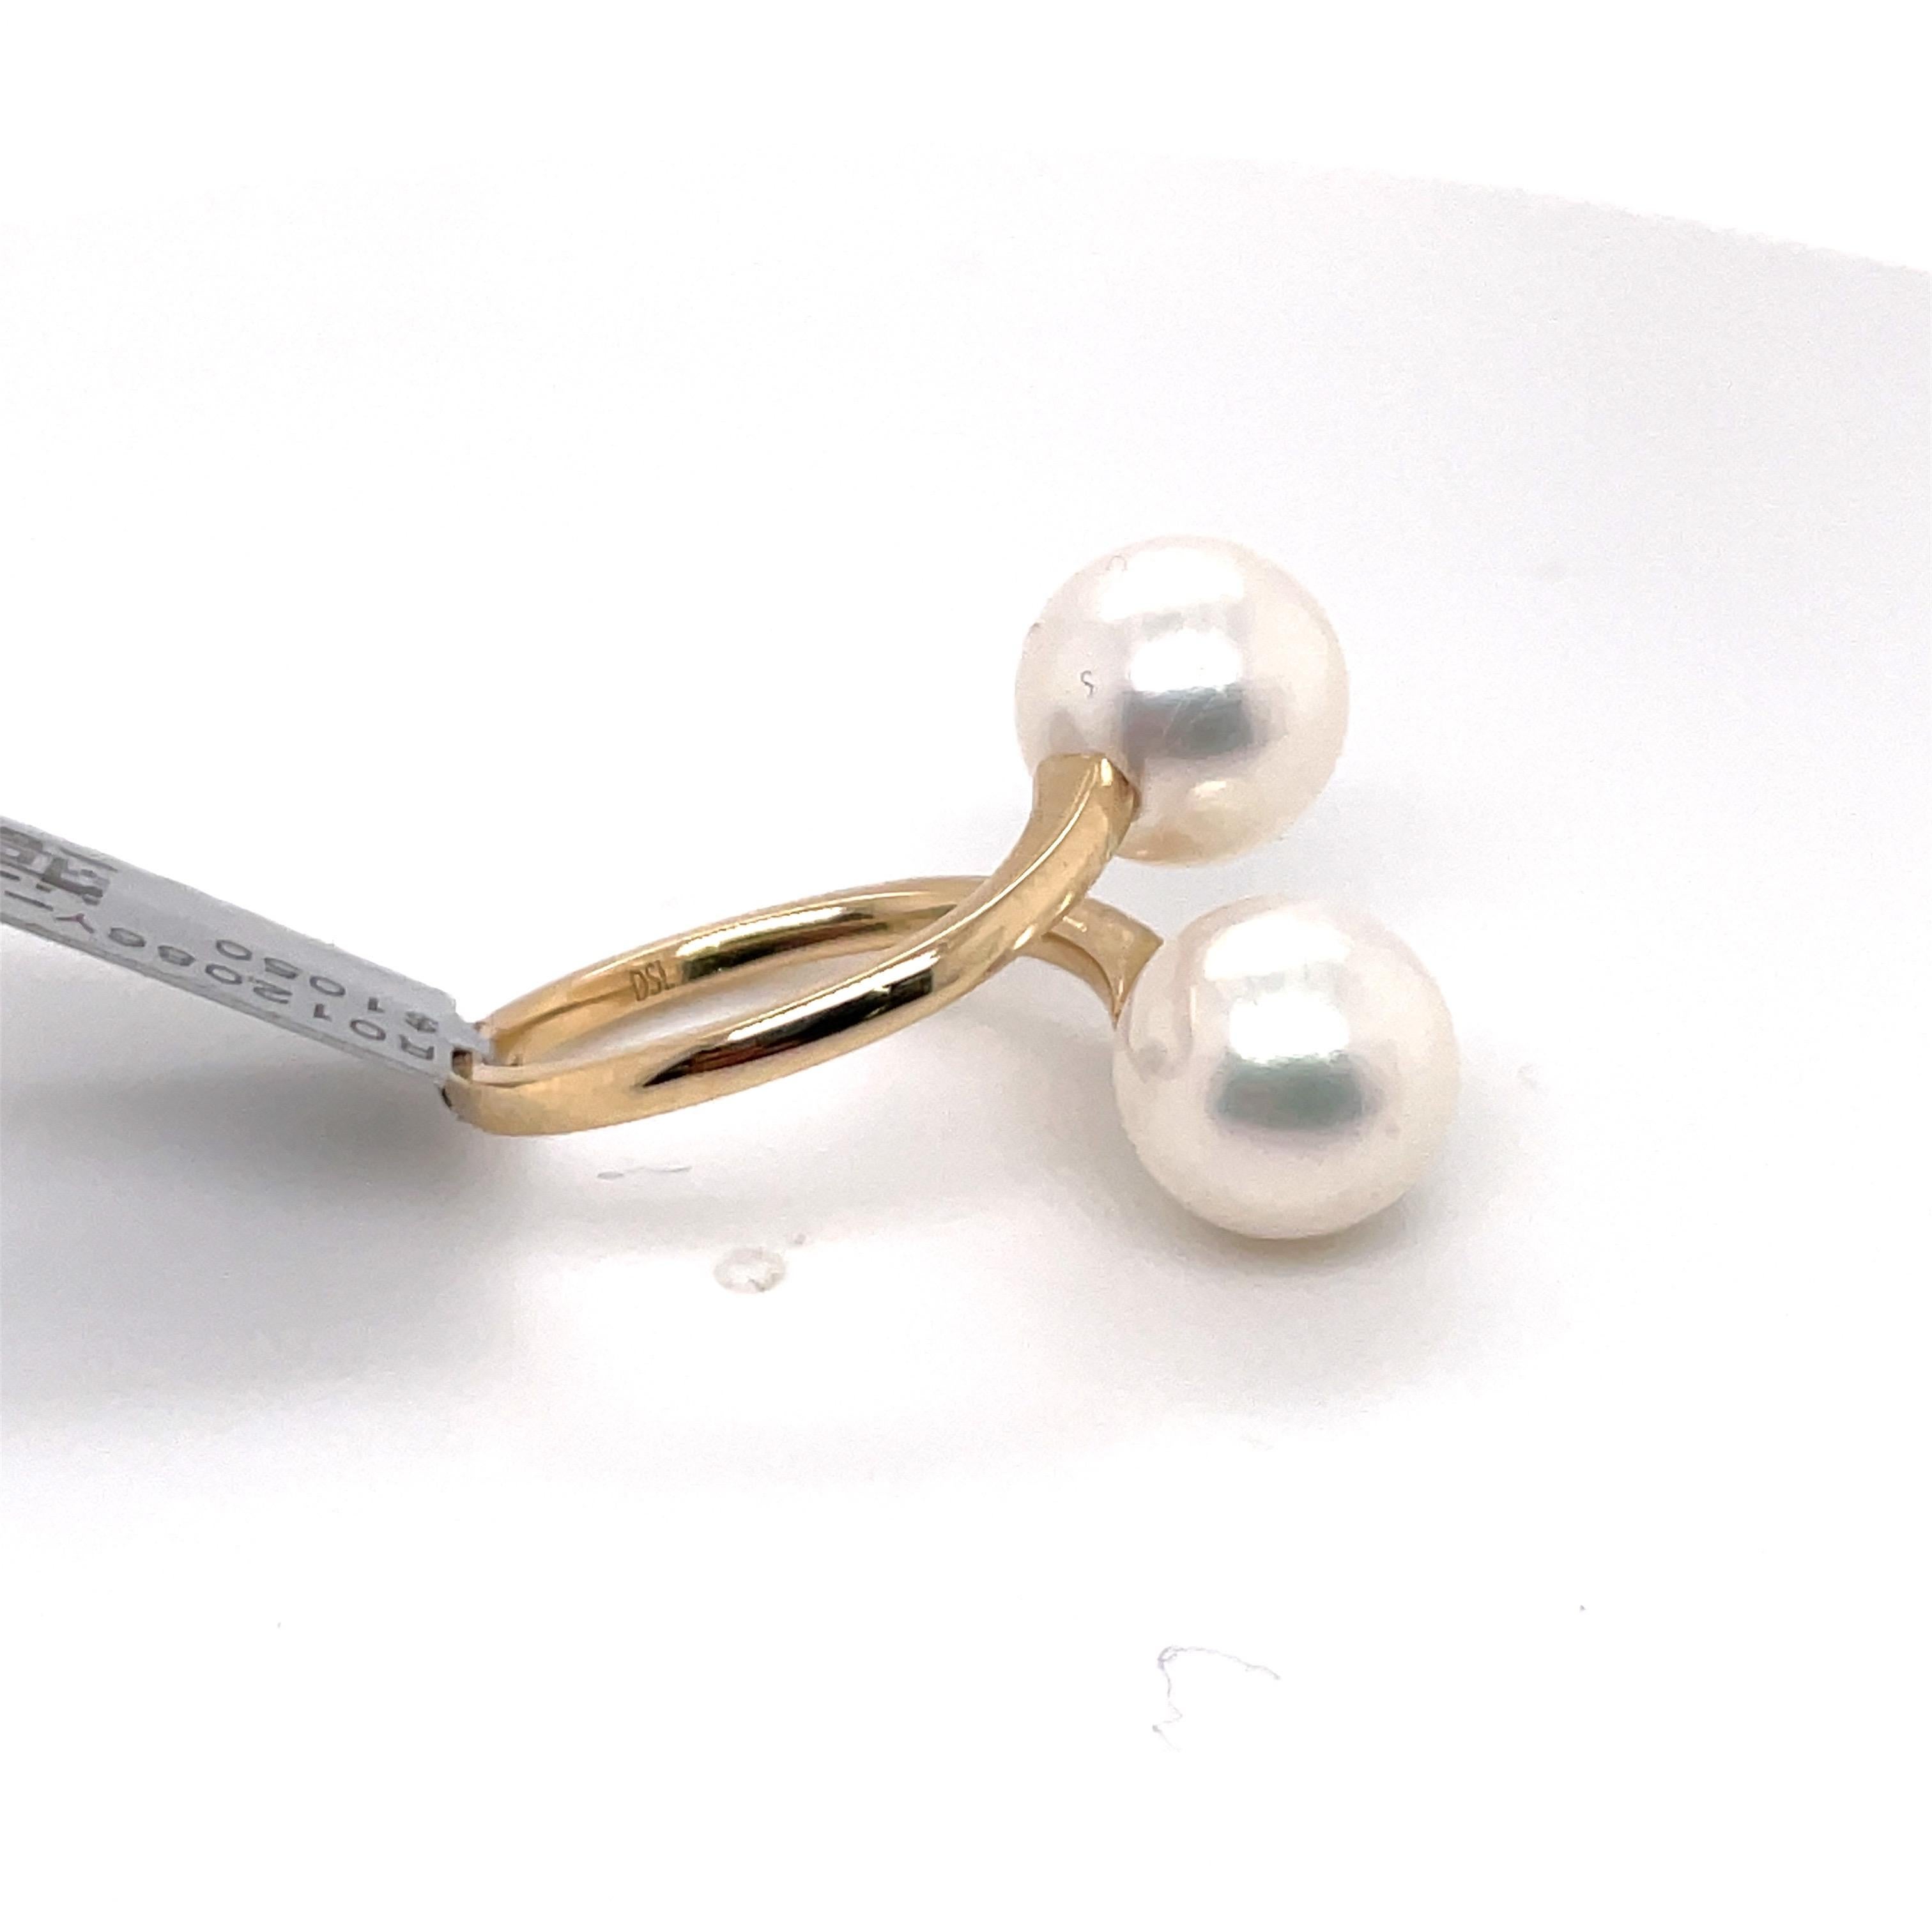 9-10 mm freshwater Pearl
14k white gold
2.3 g.